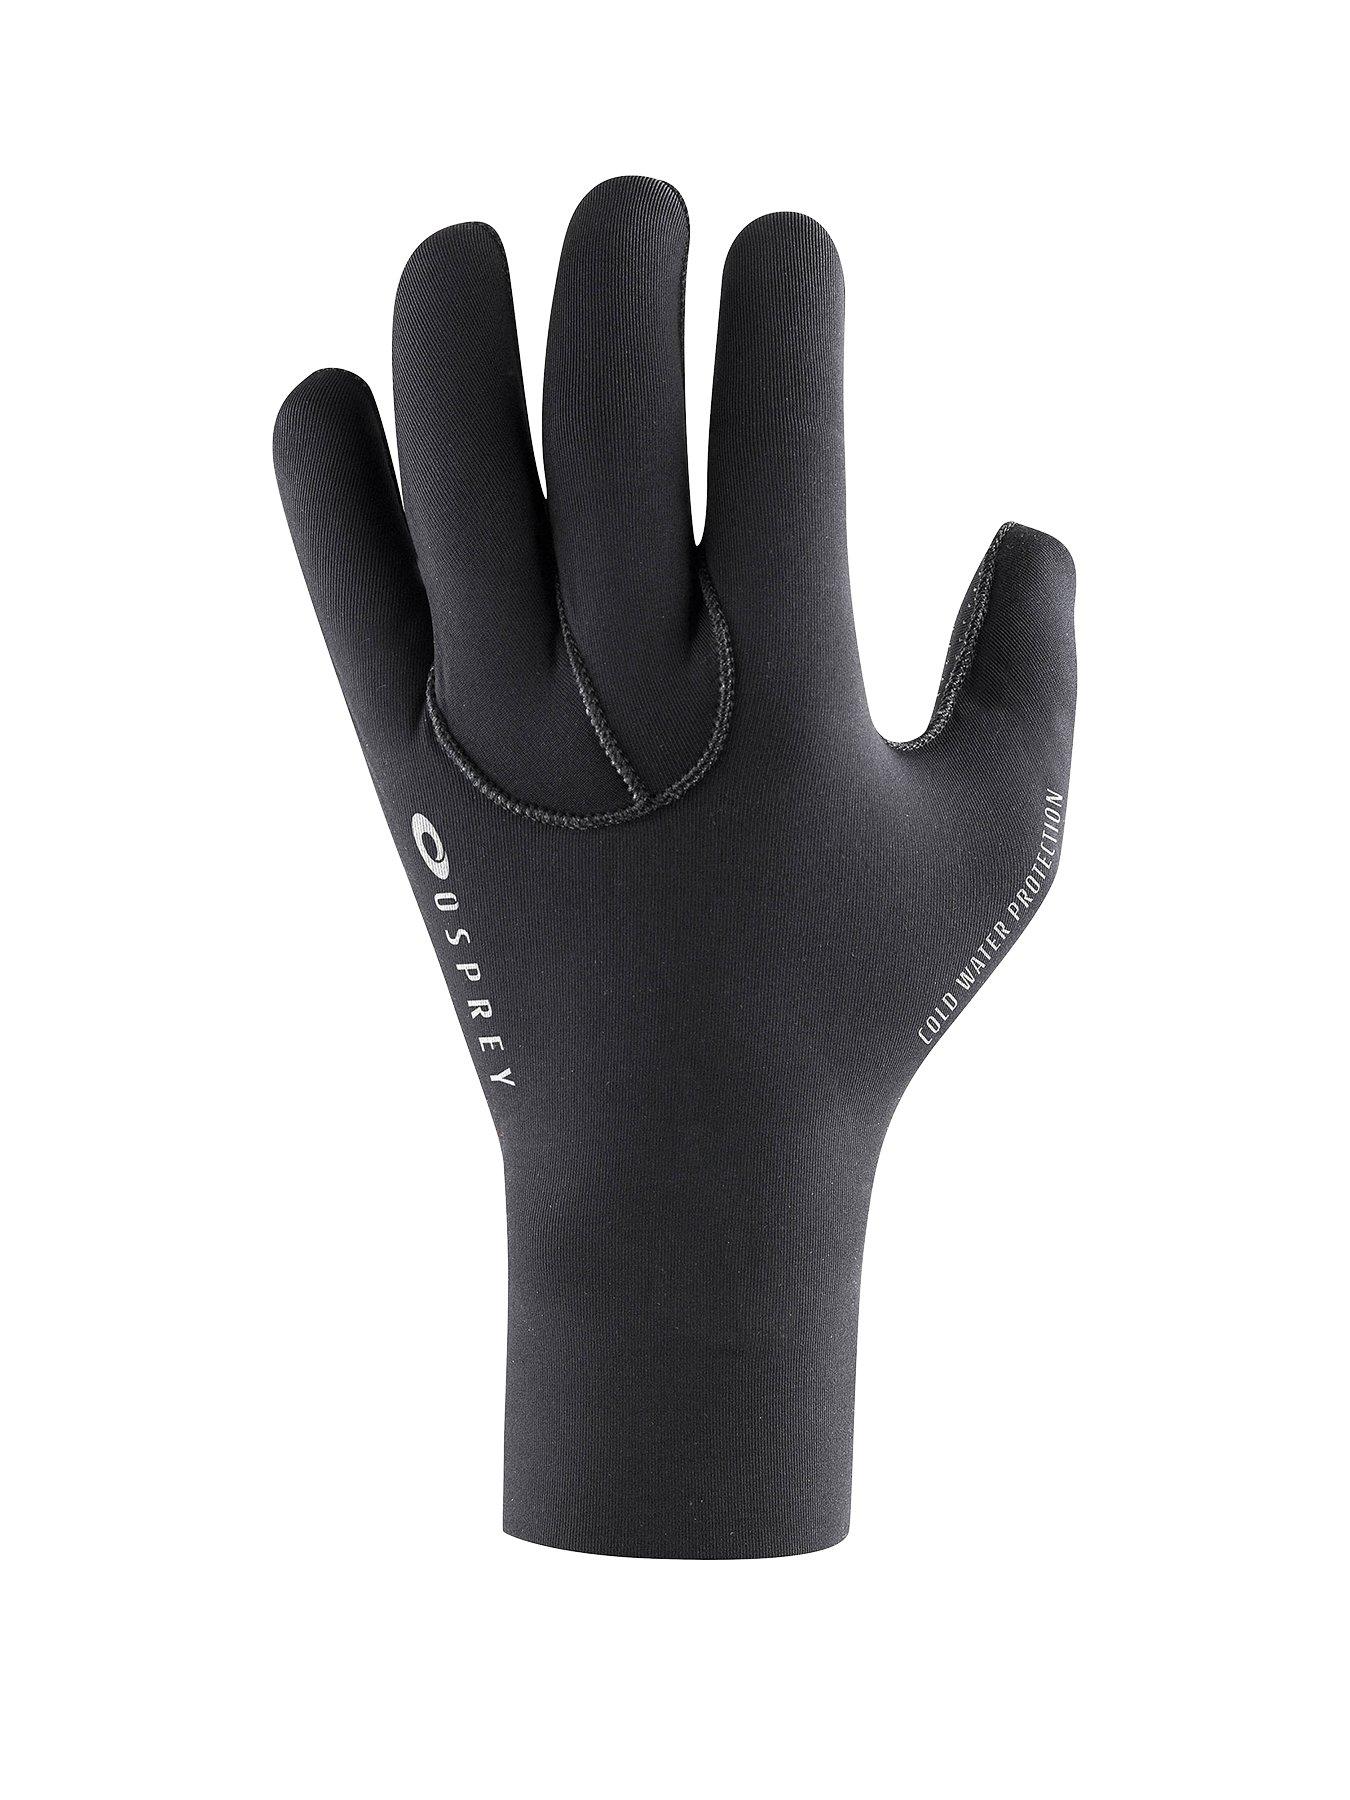 Neoprene Wetsuit Glove 3mm